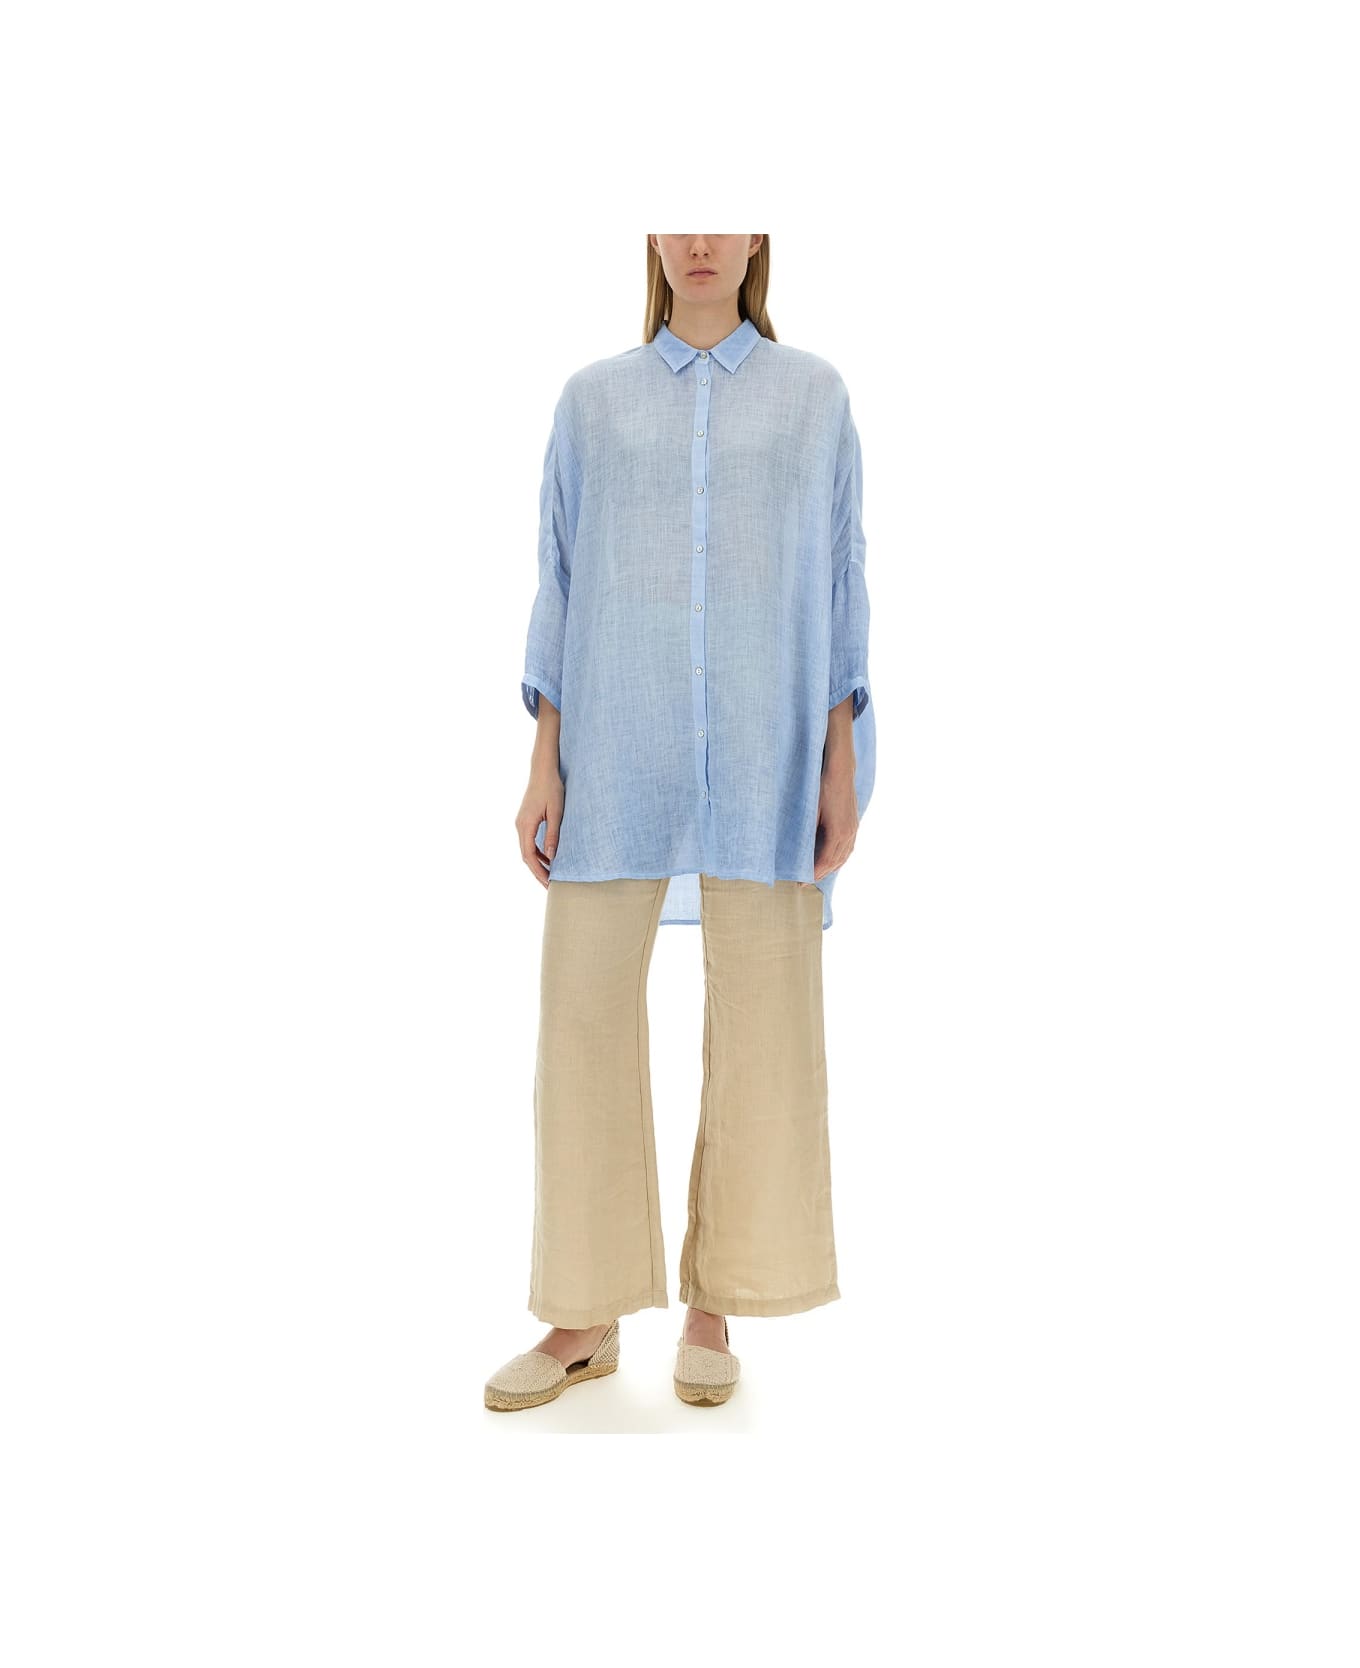 120% Lino Linen Shirt - BABY BLUE